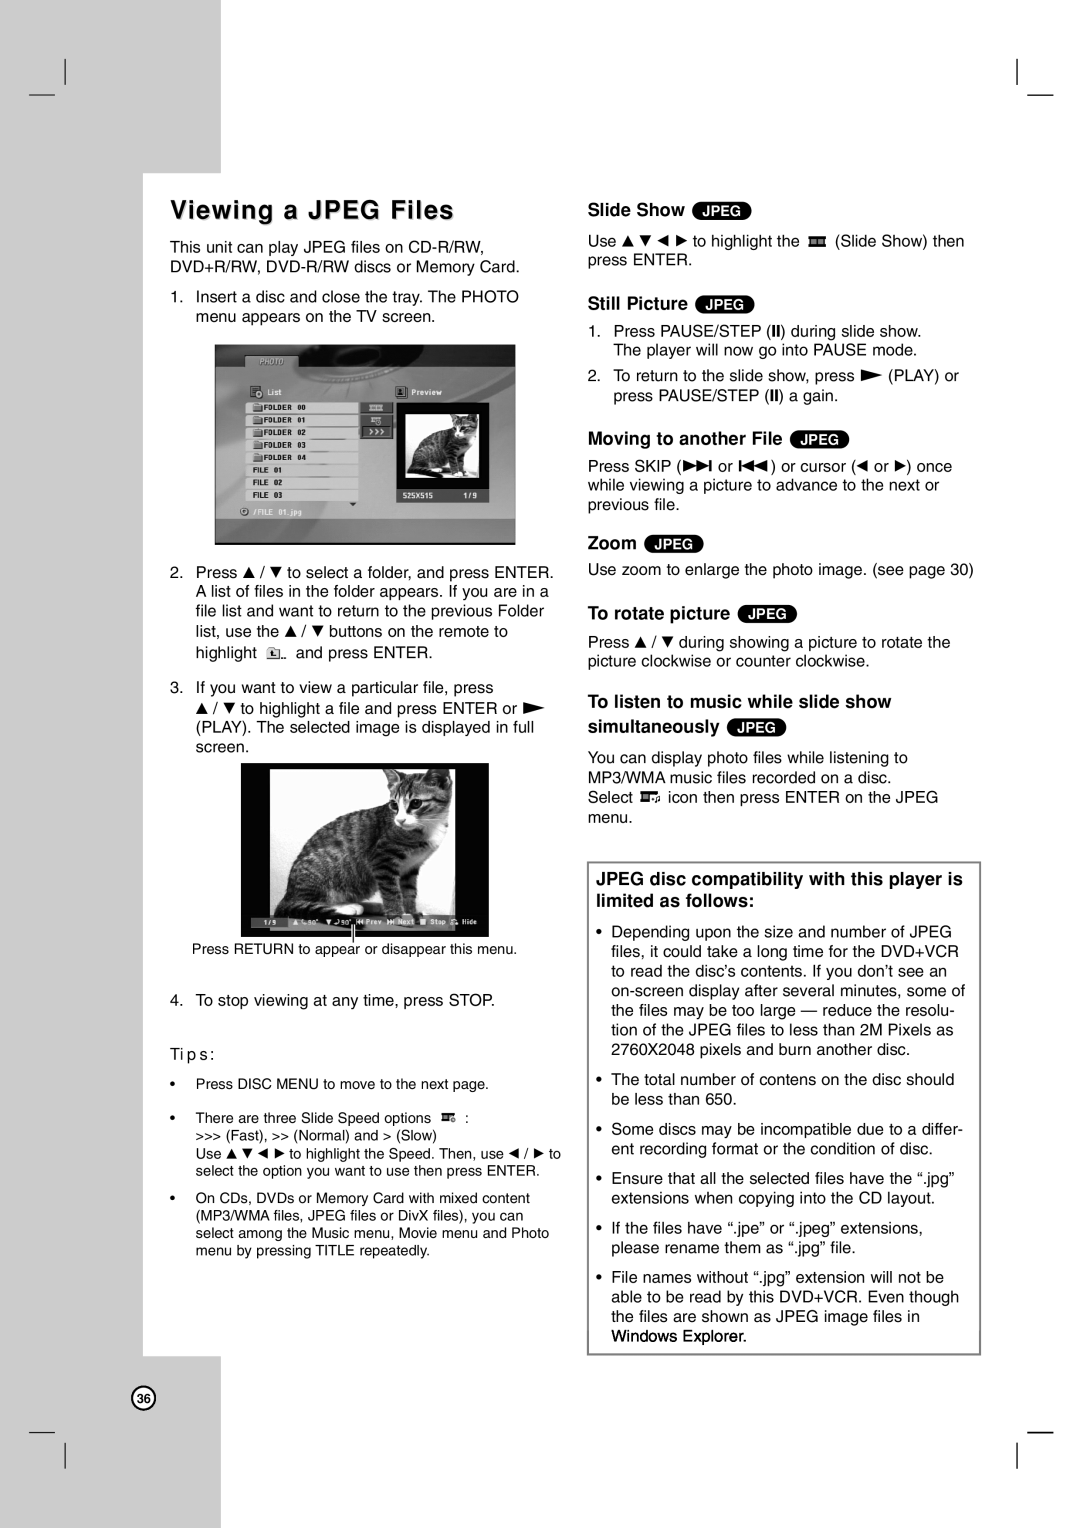 LG Electronics LDX-514 Viewing a JPEG Files, Slide Show JPEG, Still Picture JPEG, Moving to another File JPEG, Zoom JPEG 